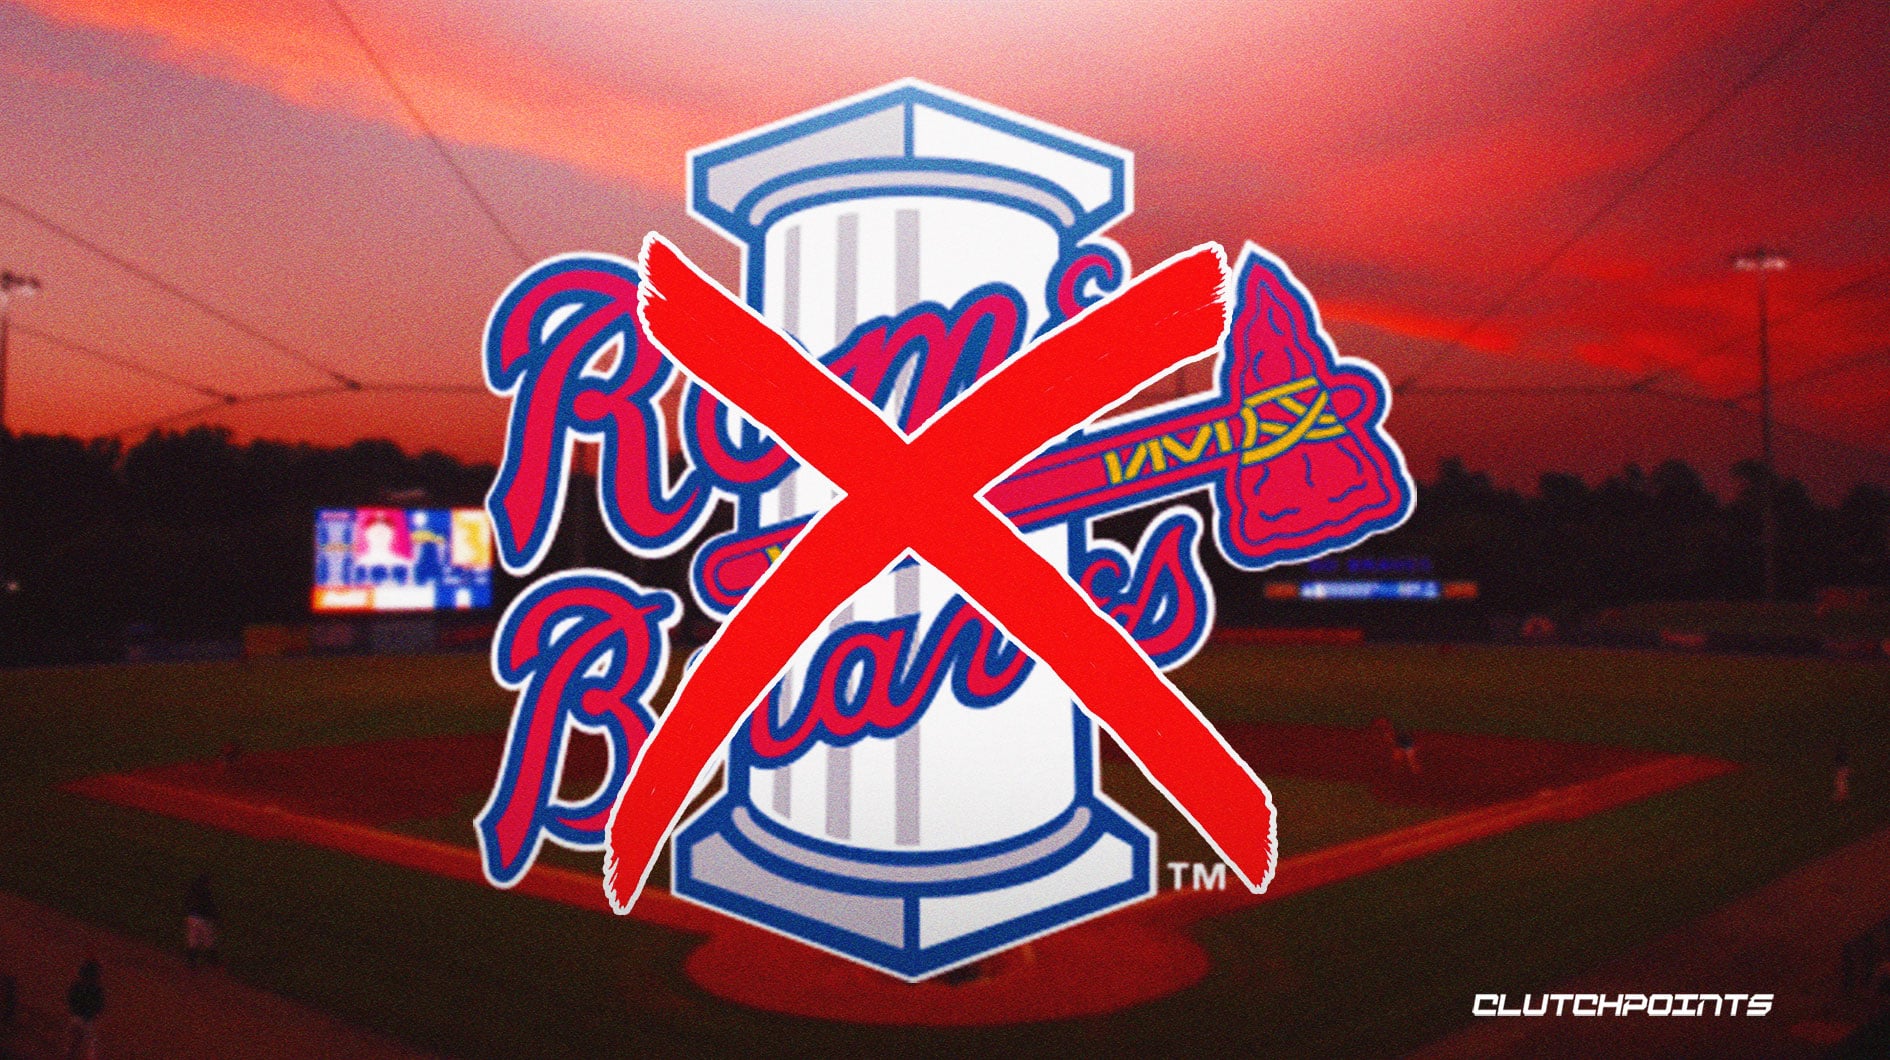 Minor league Braves affiliate dropping longtime nickname